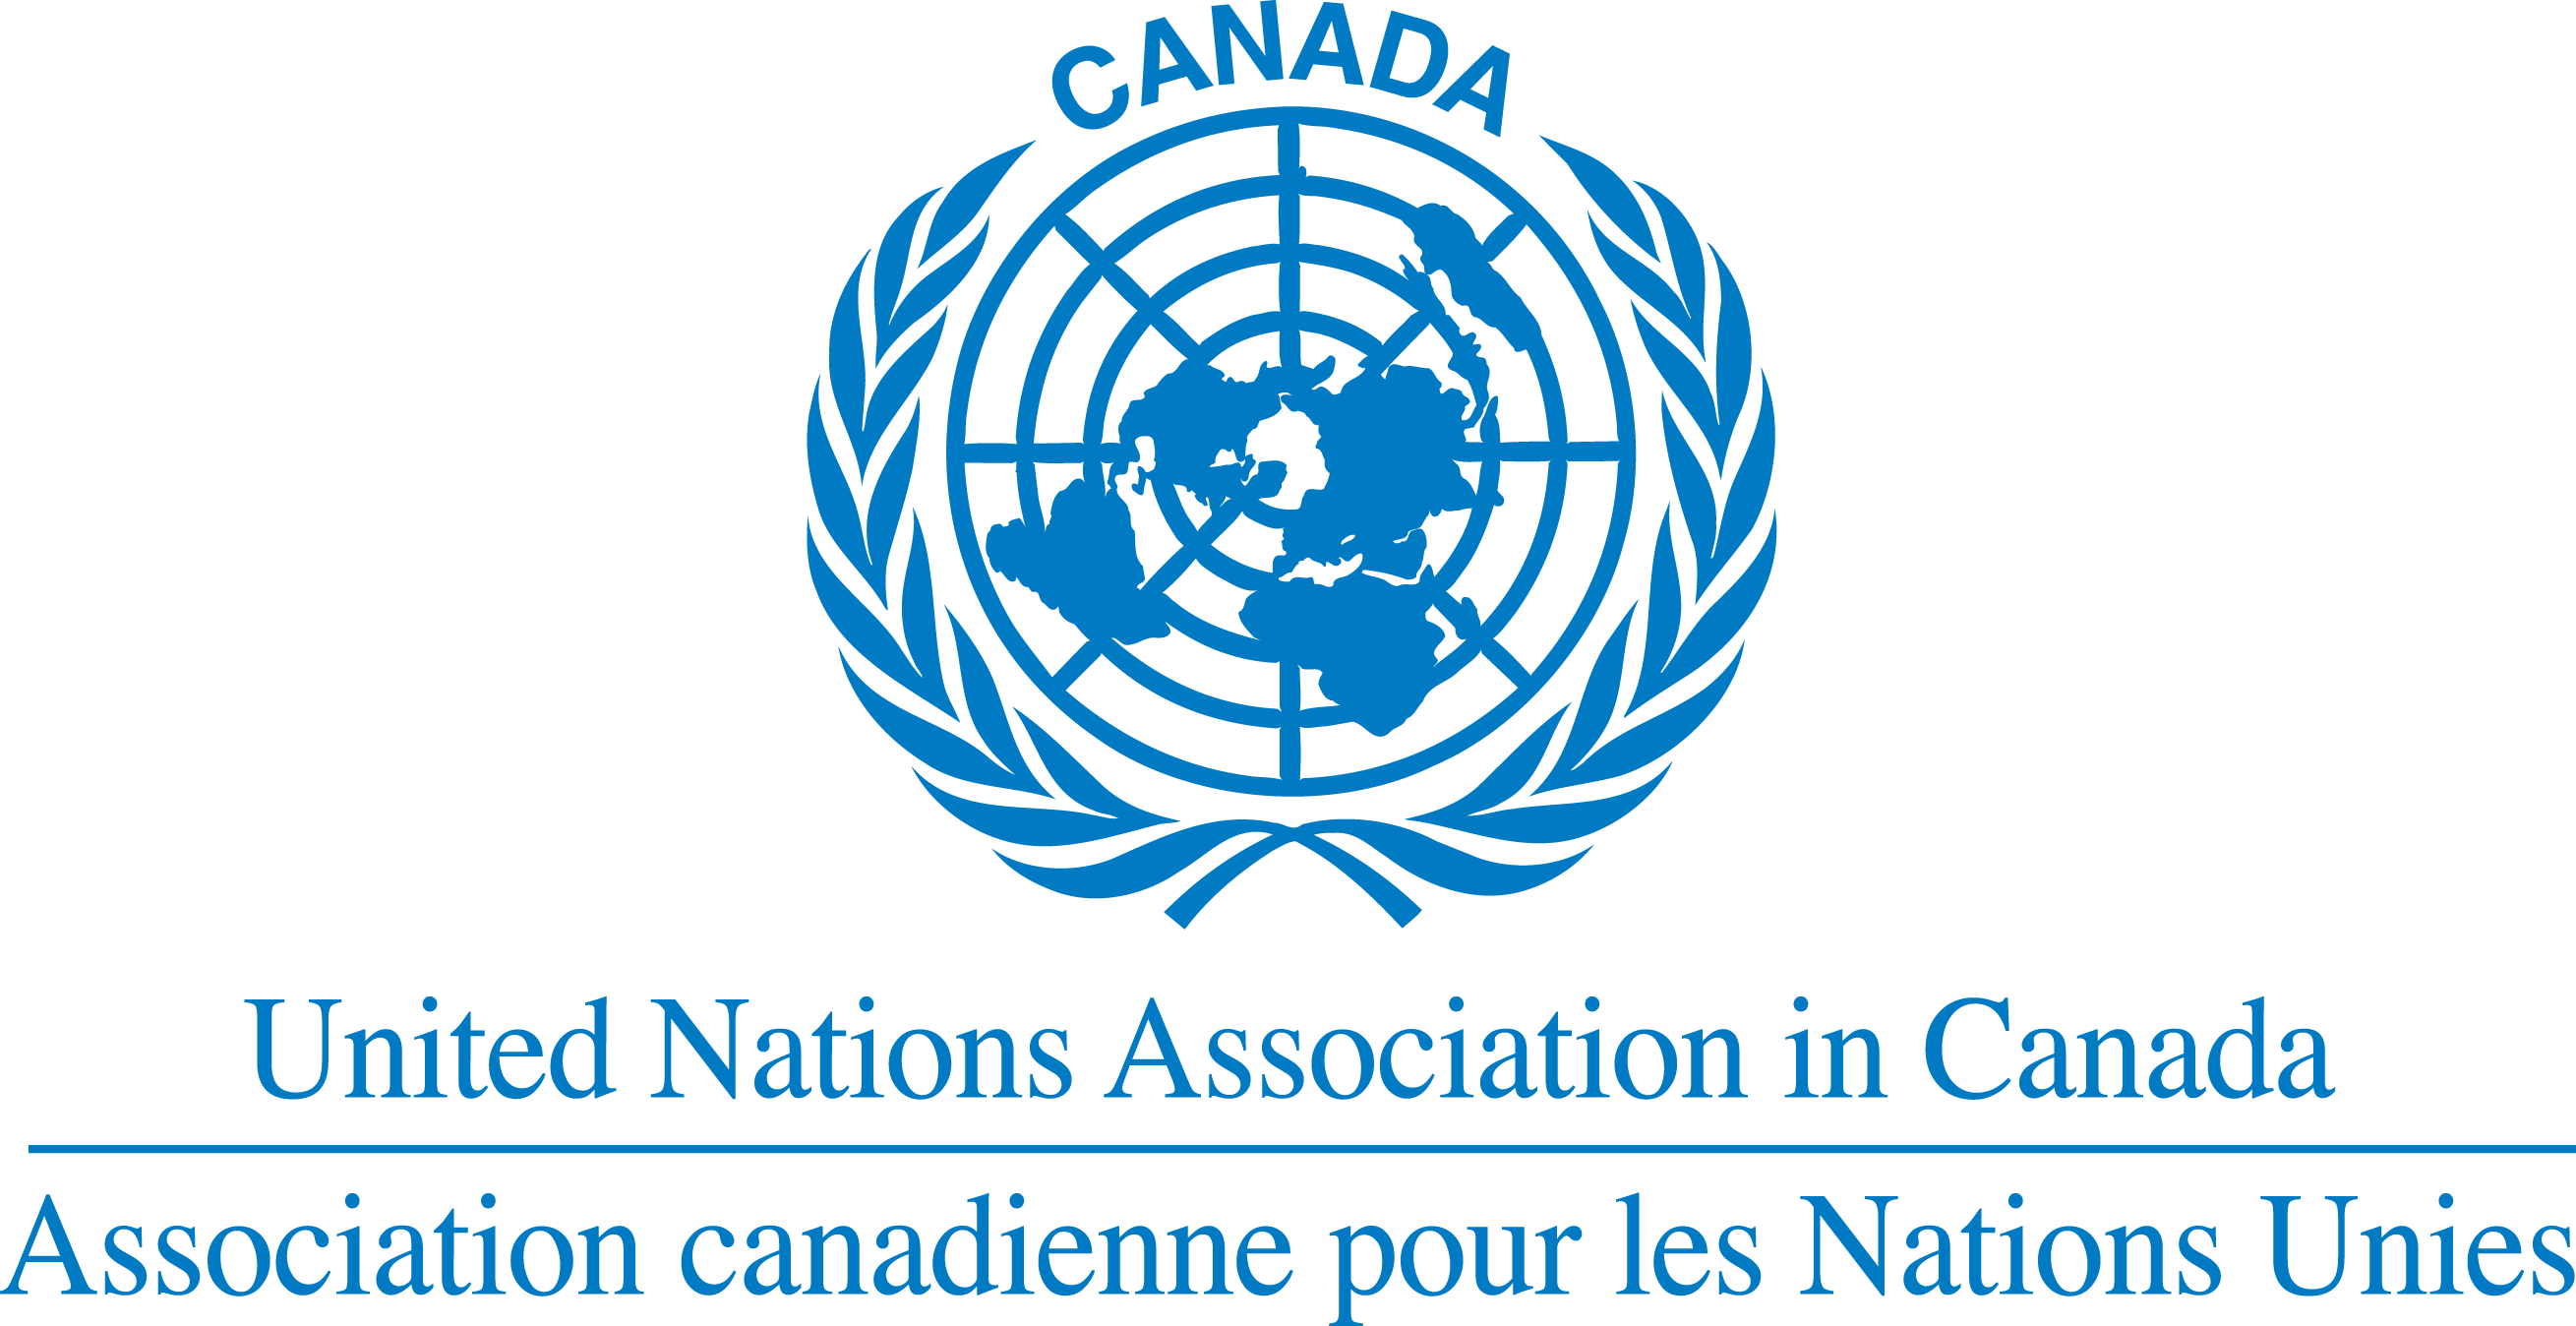 United Nations Association in Canada logo